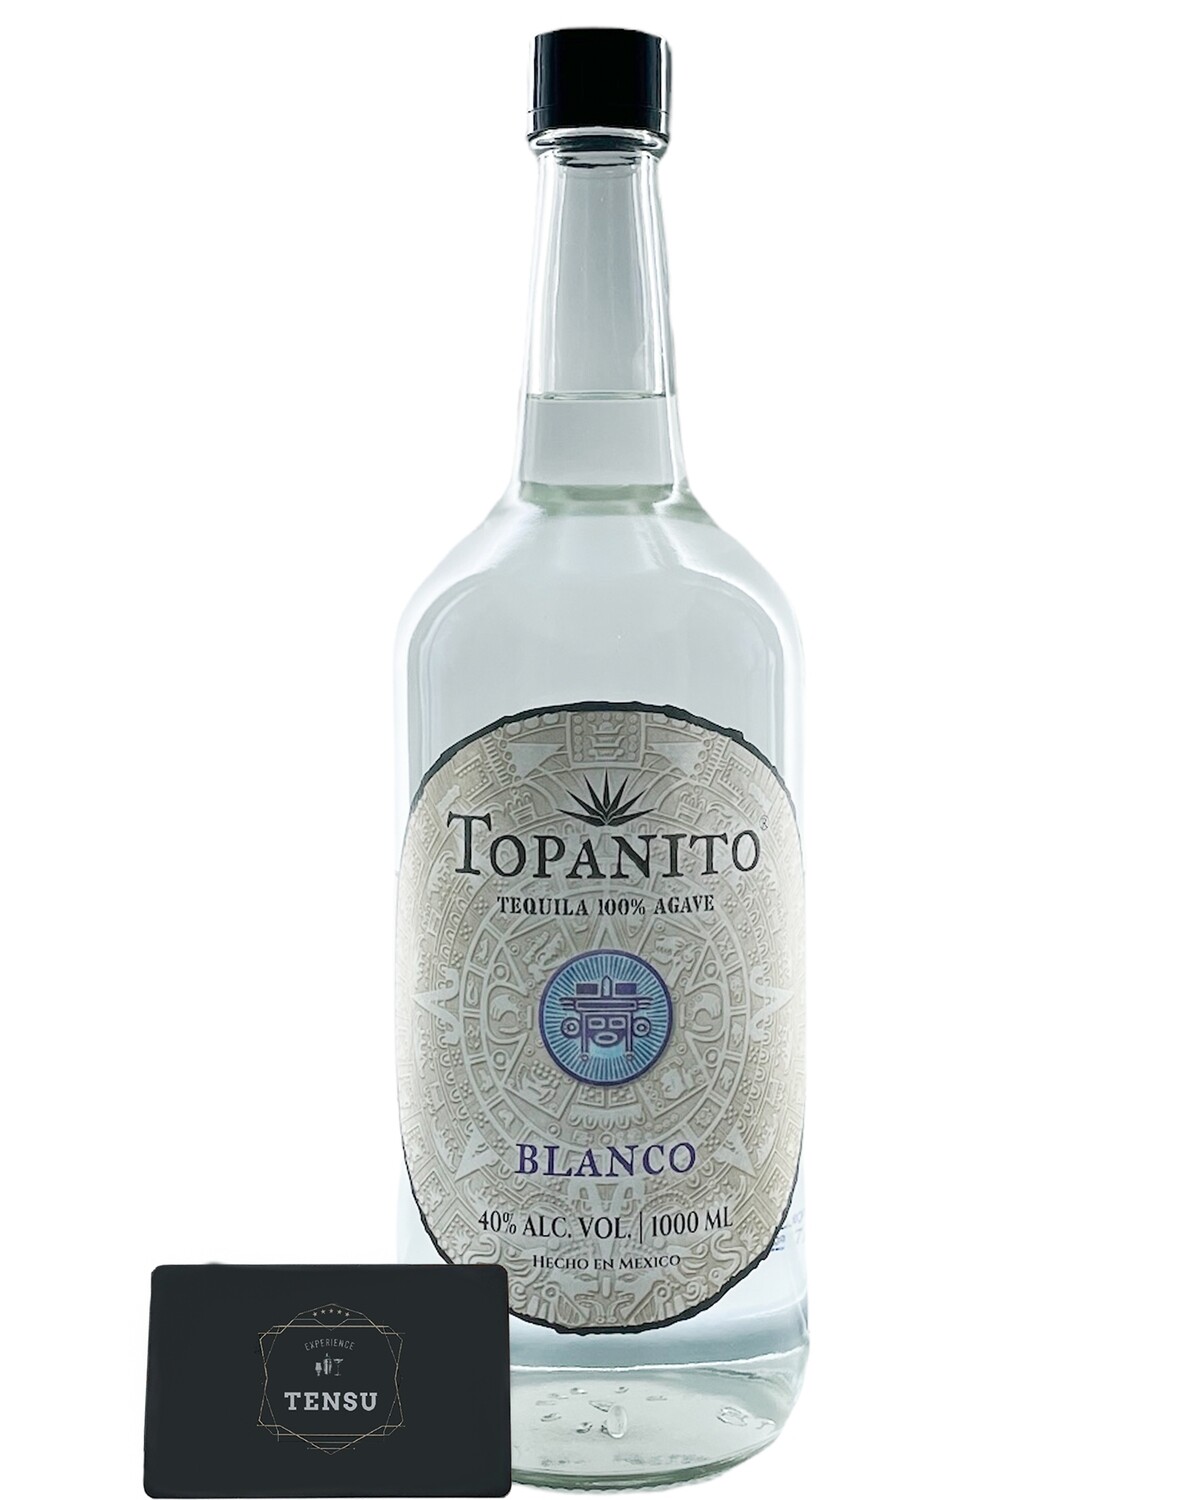 Tequila Topanito Blanco 40.0% (1.00 Liter)